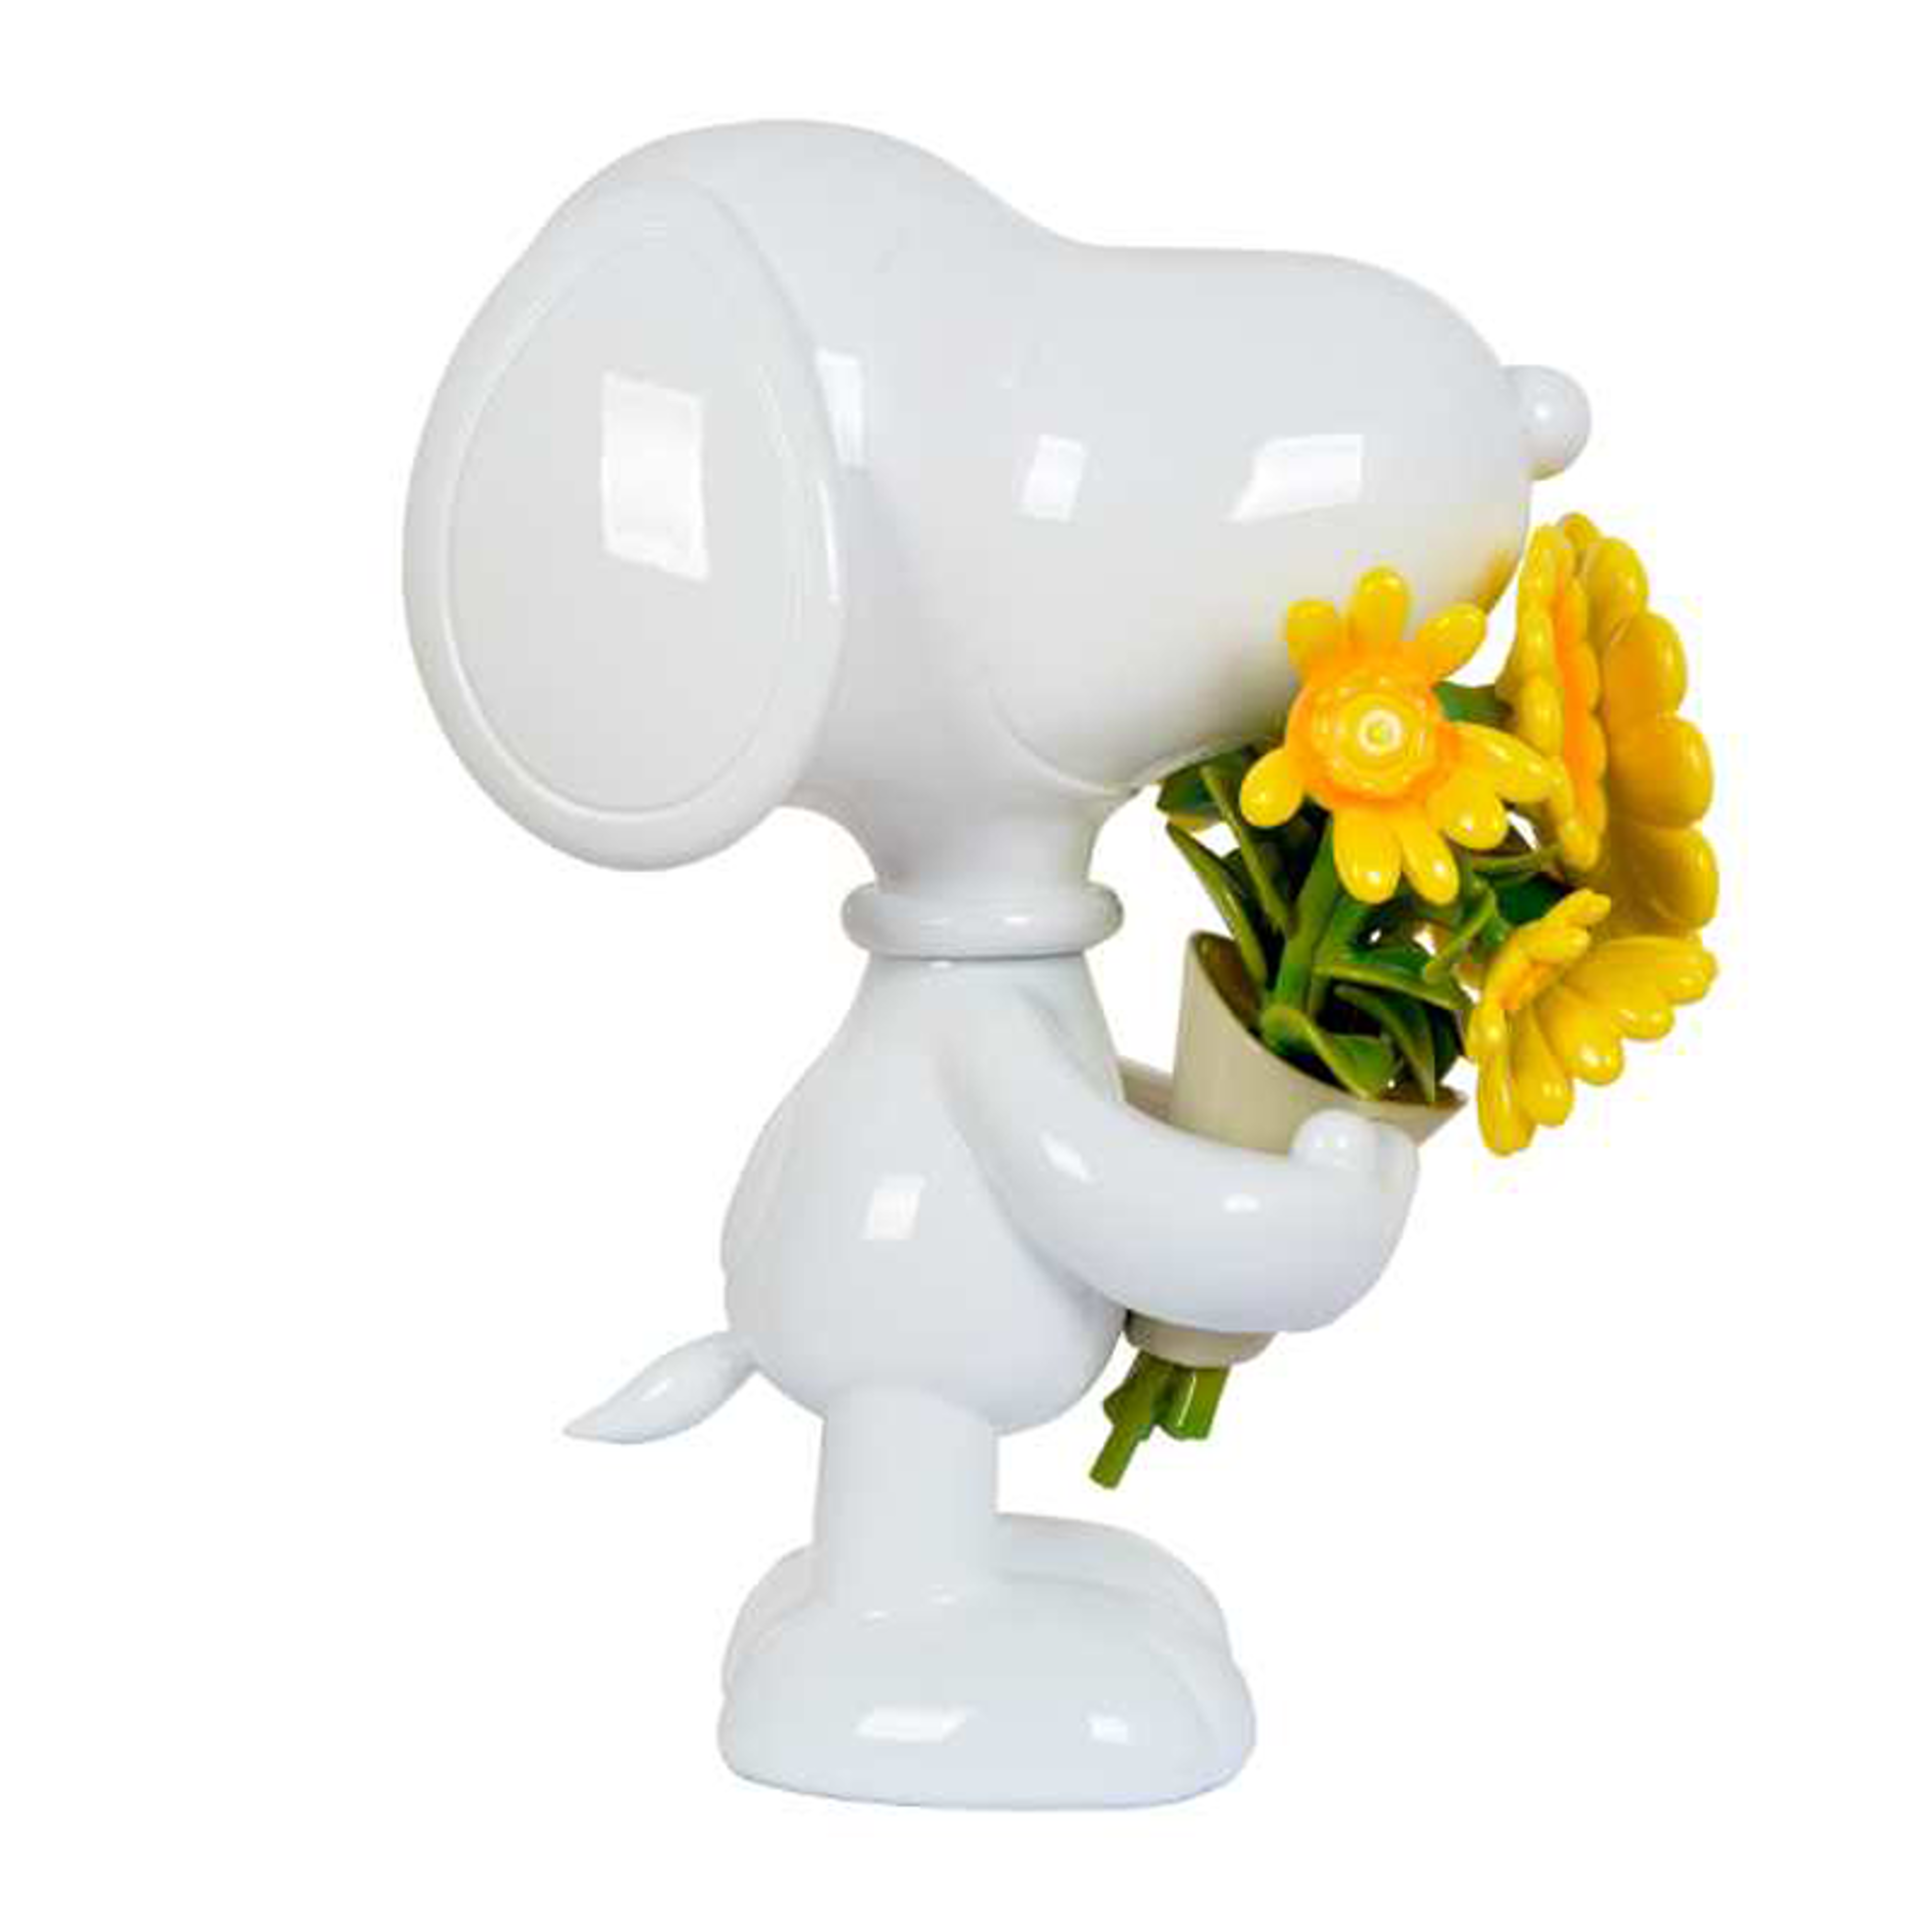 Alternate View 3 of Snoopy Gloss White | Flower